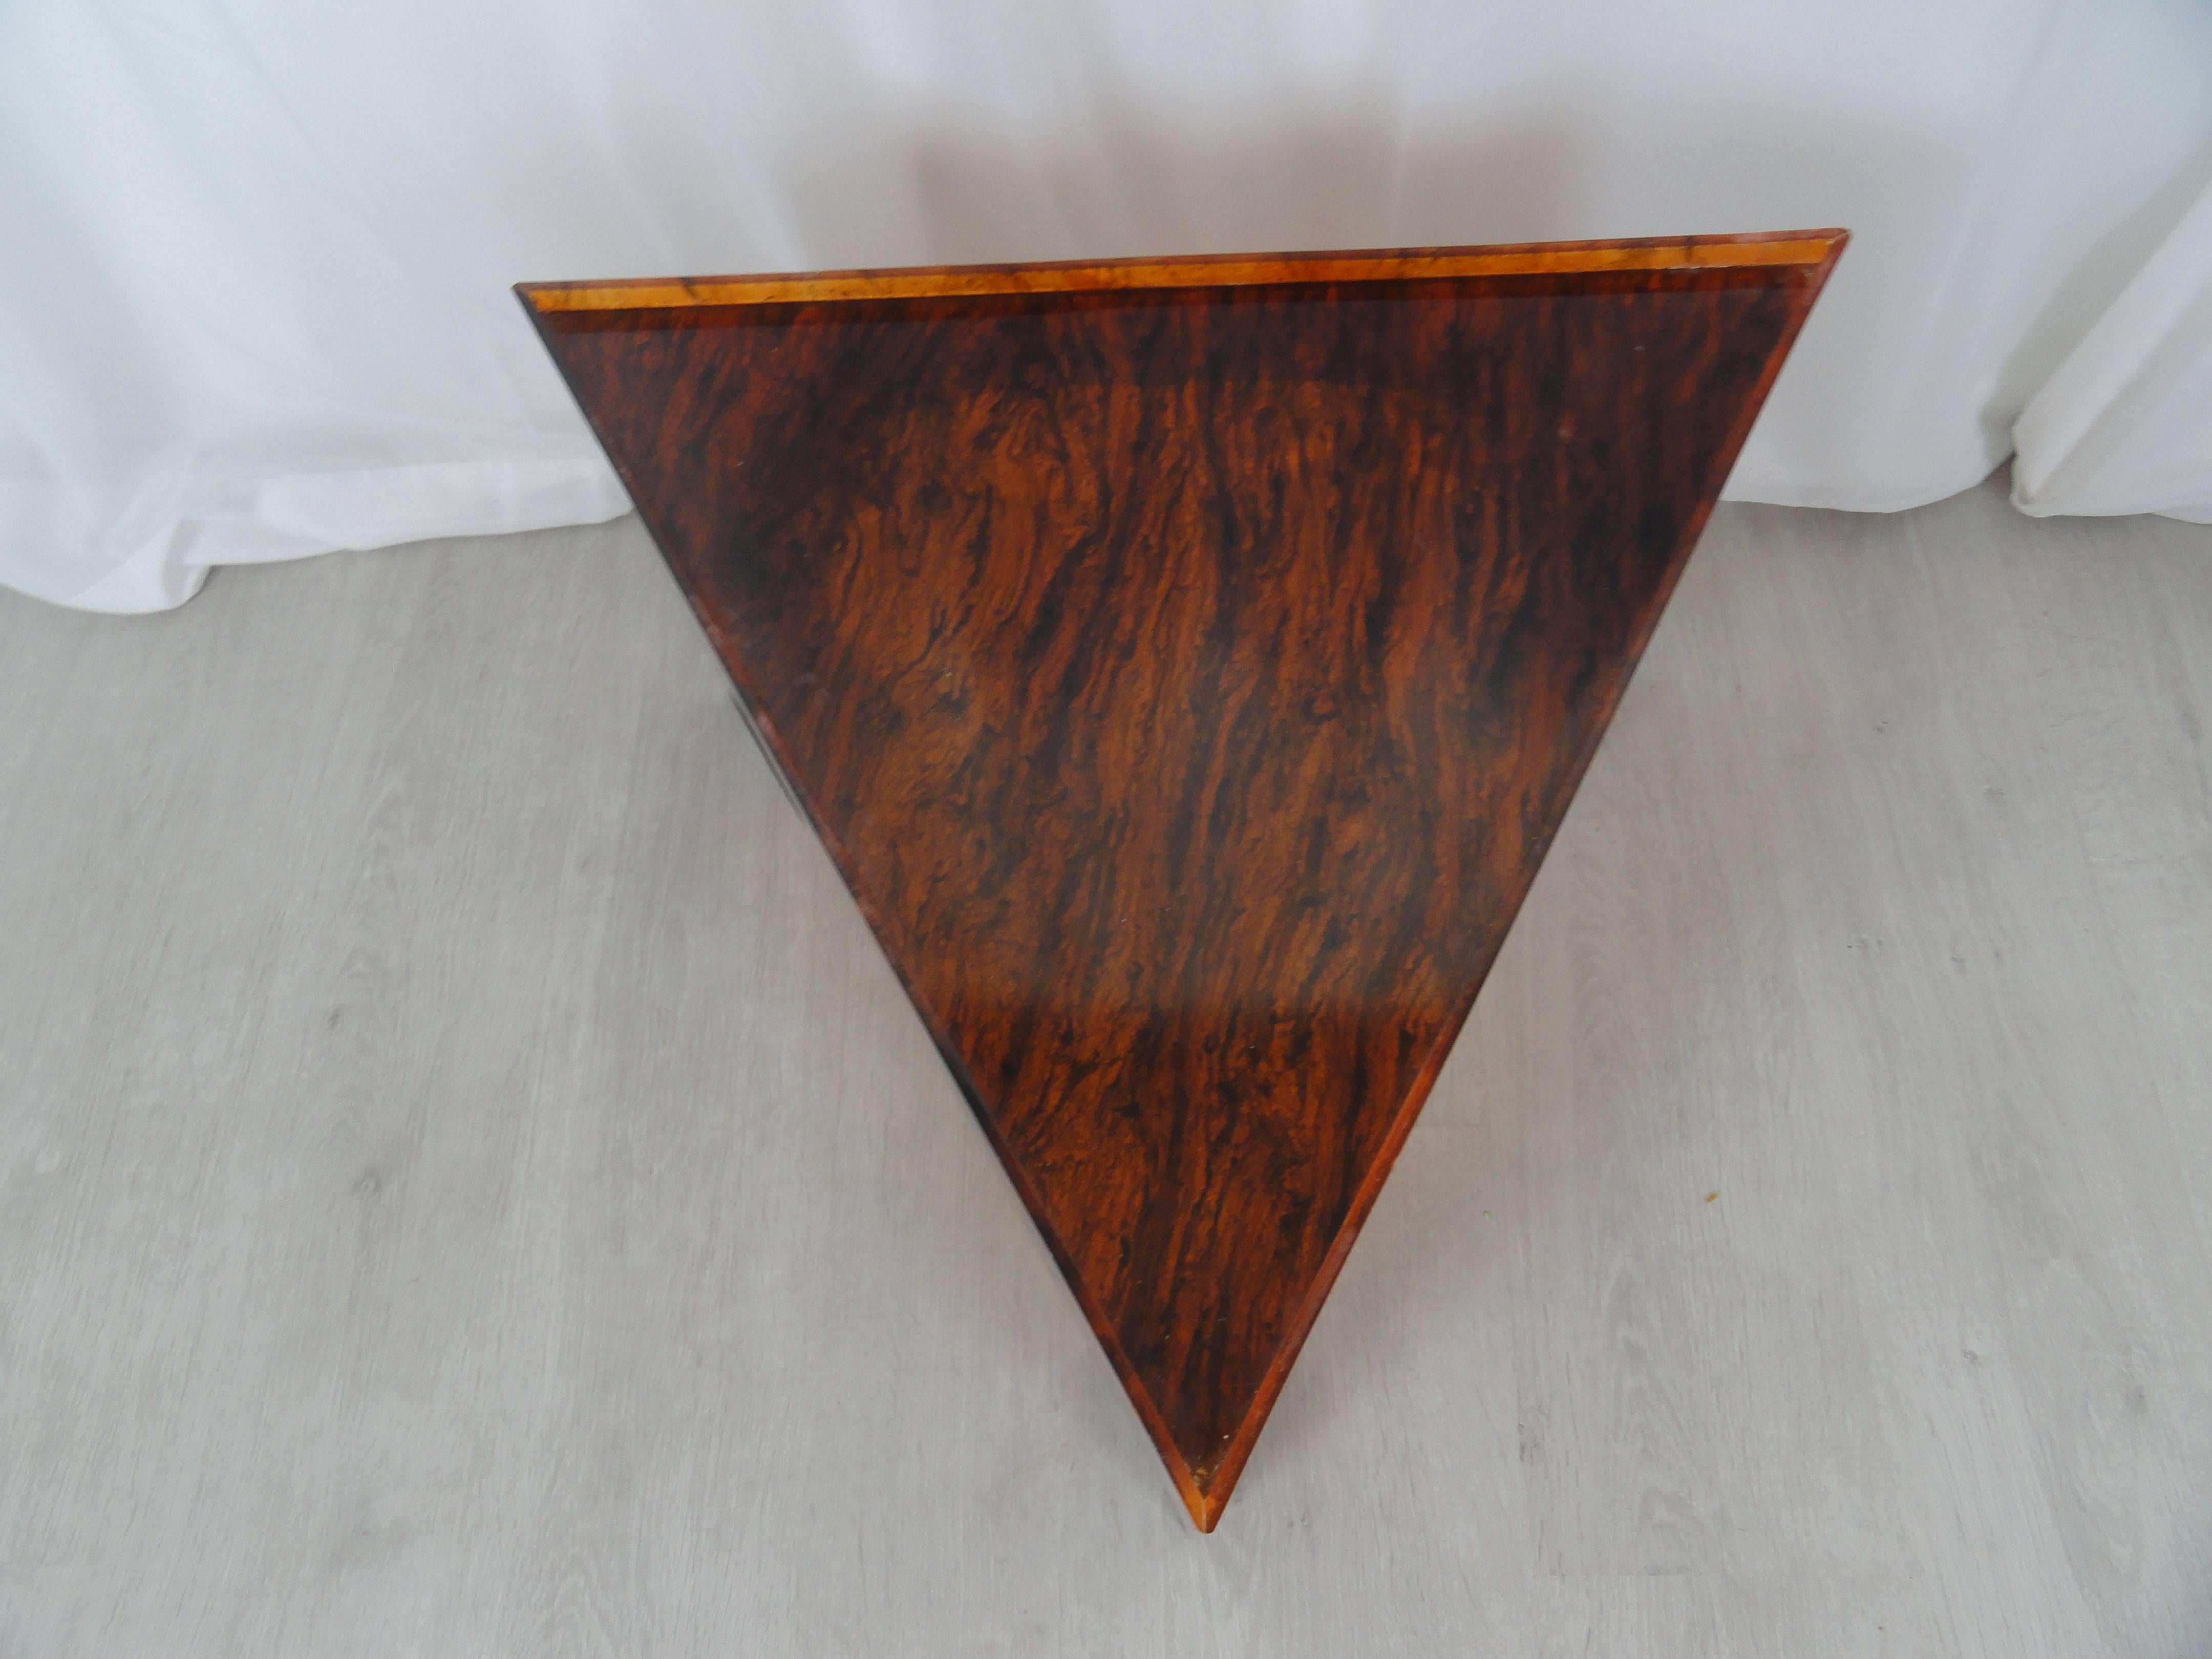 Faux tortoiseshell acrylic triangle table. Measures: 15